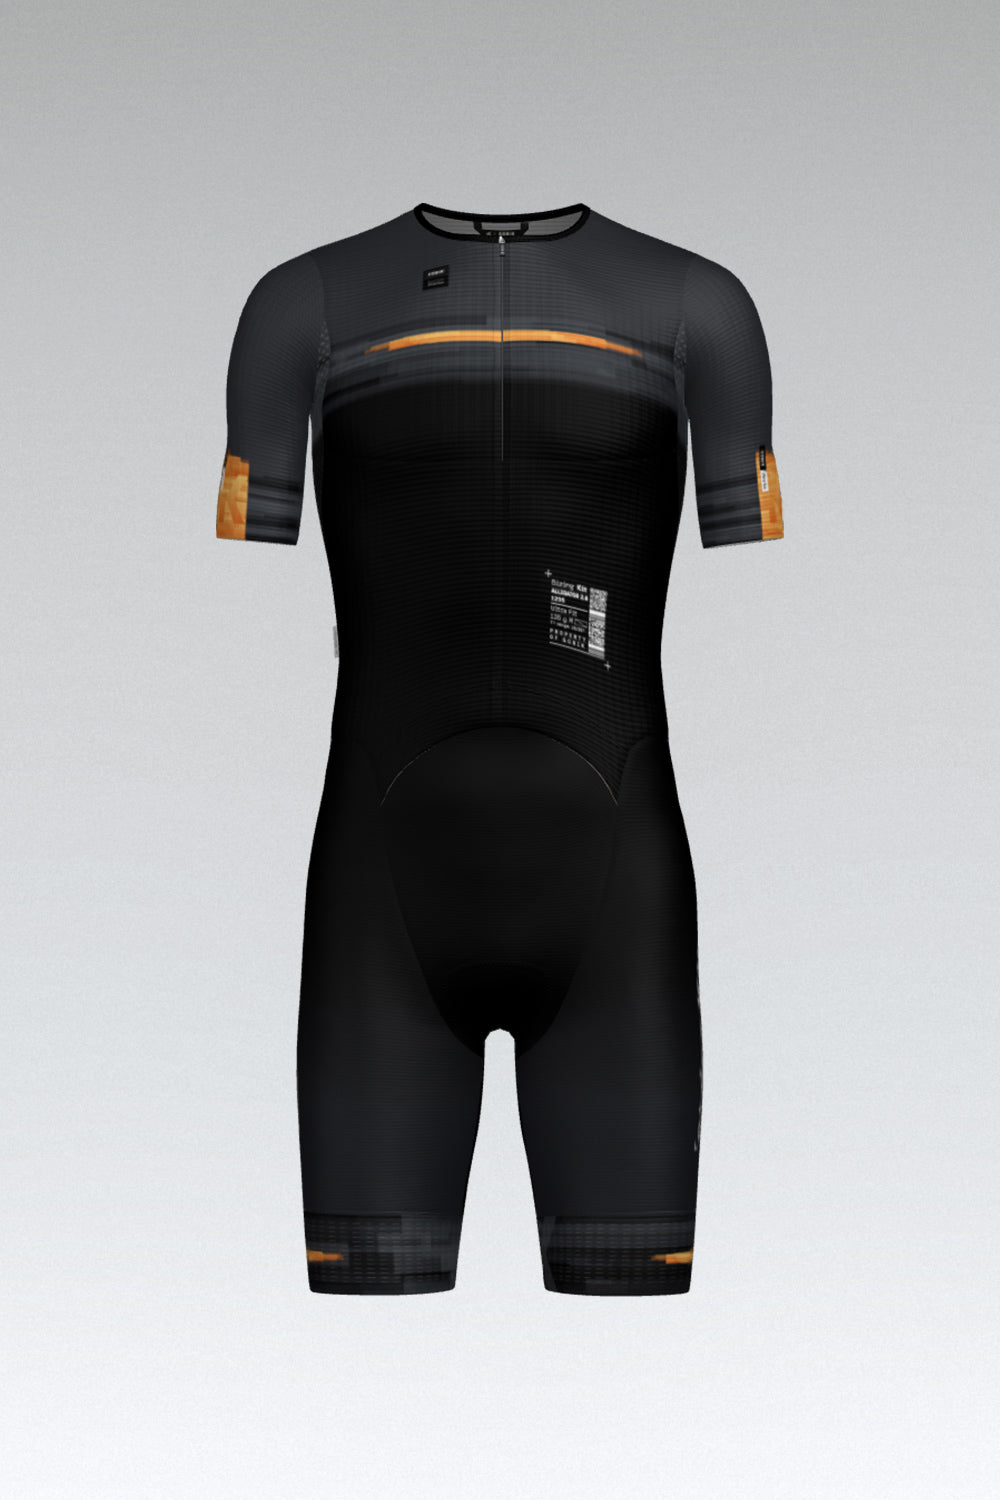 Personalized Triathlon Clothing · Gobik Custom Works